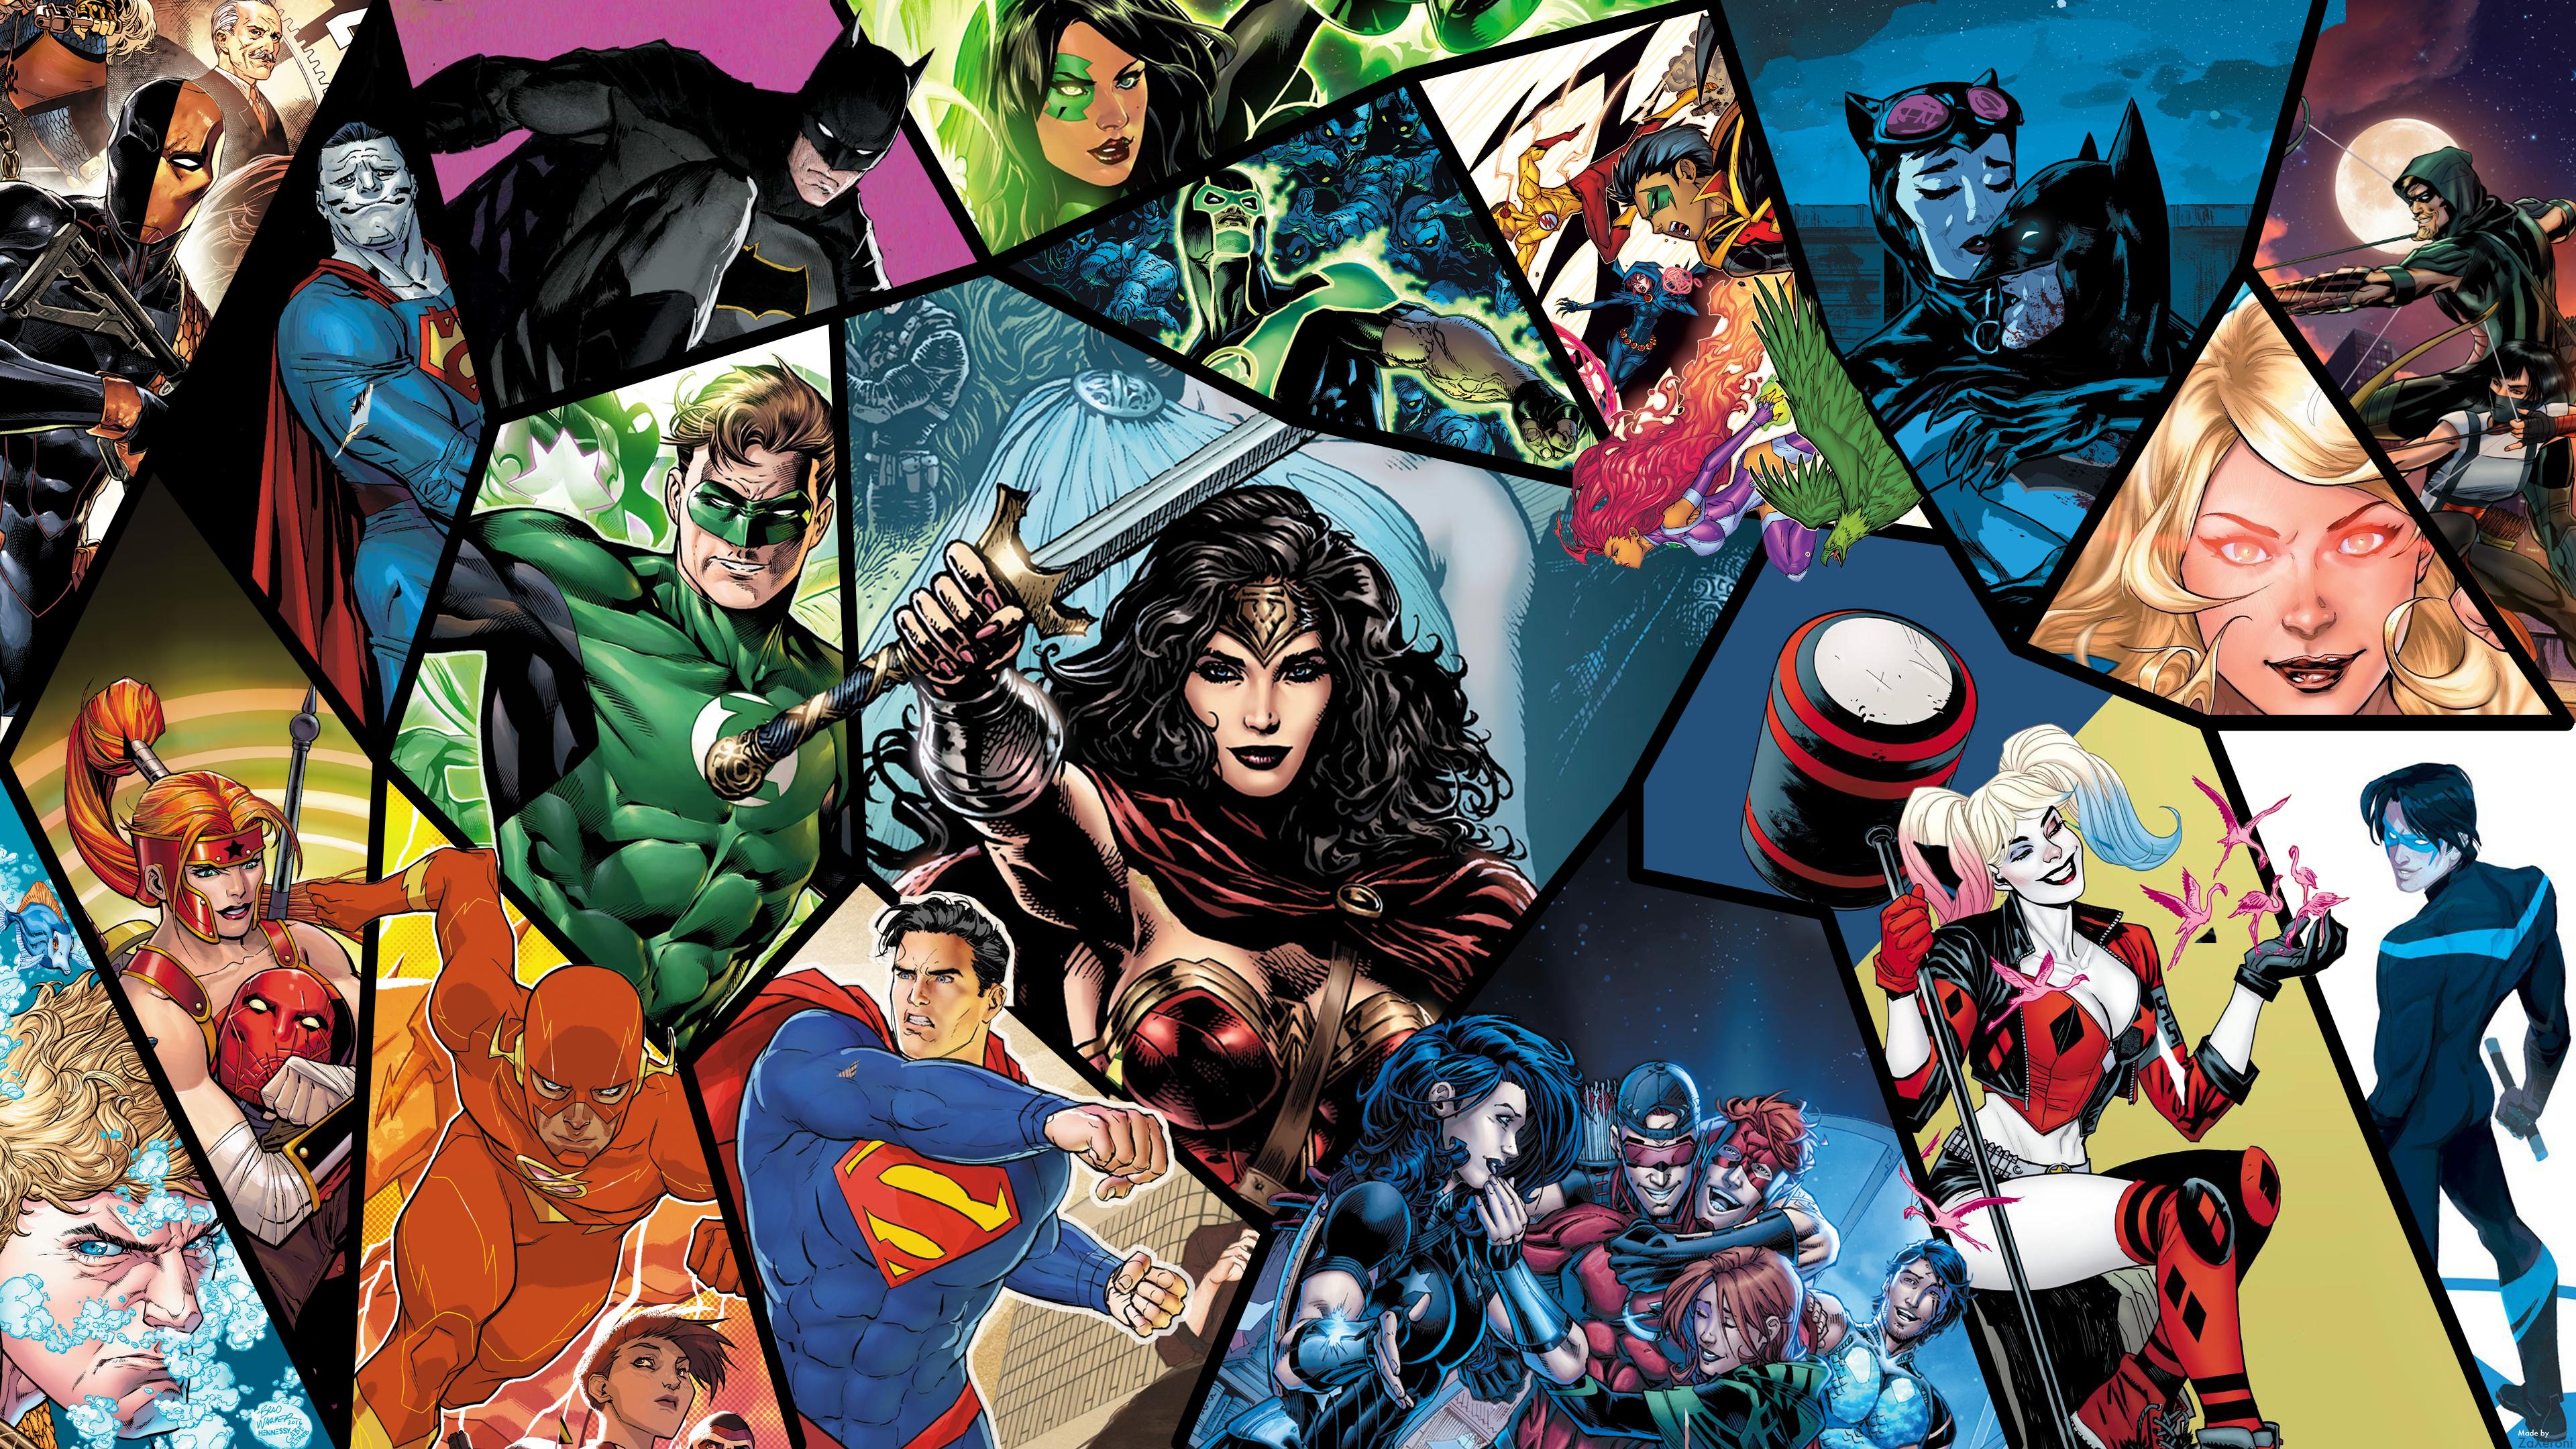 dcコミックの壁紙,漫画,コミックブック,コラージュ,架空の人物,スーパーヒーロー